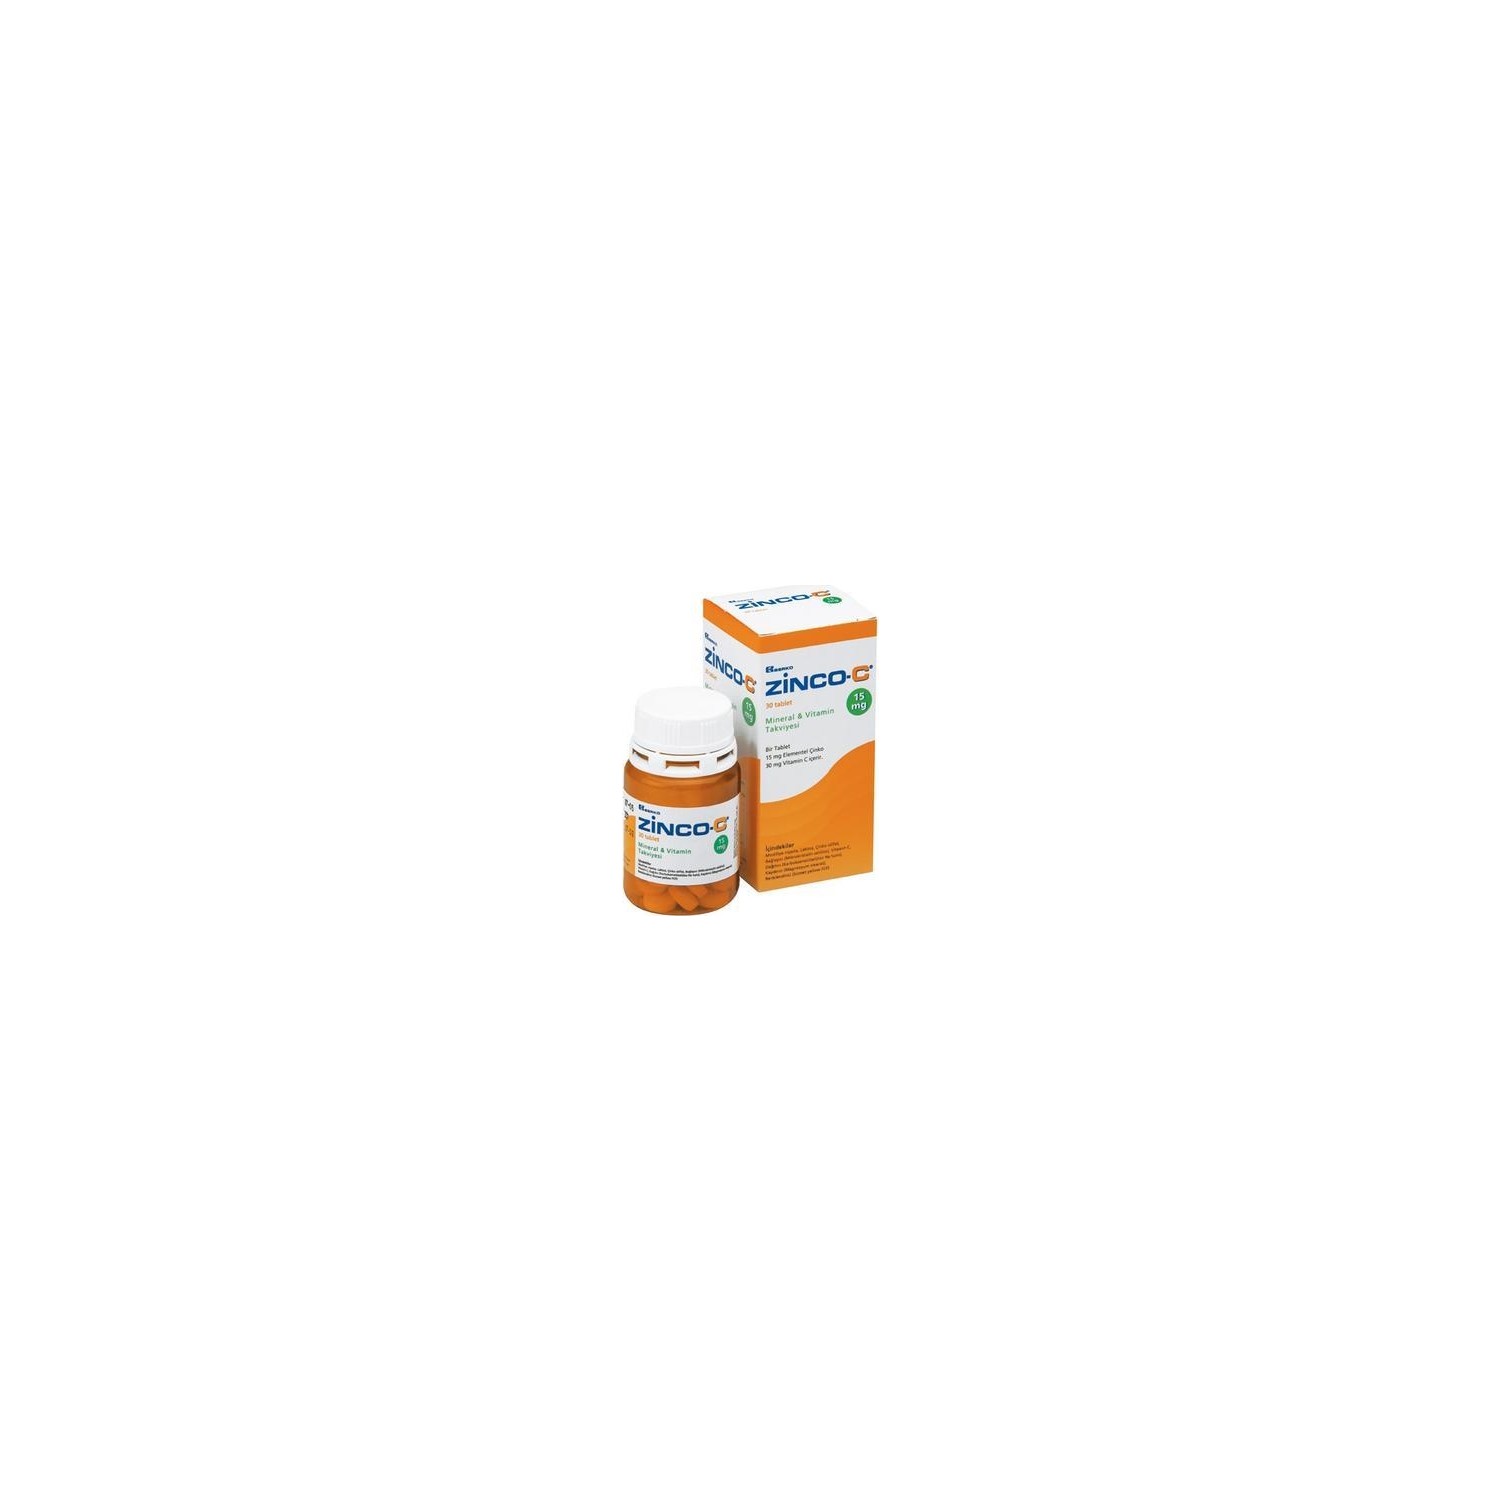 Zinco-C 15 mg 30 Tablet